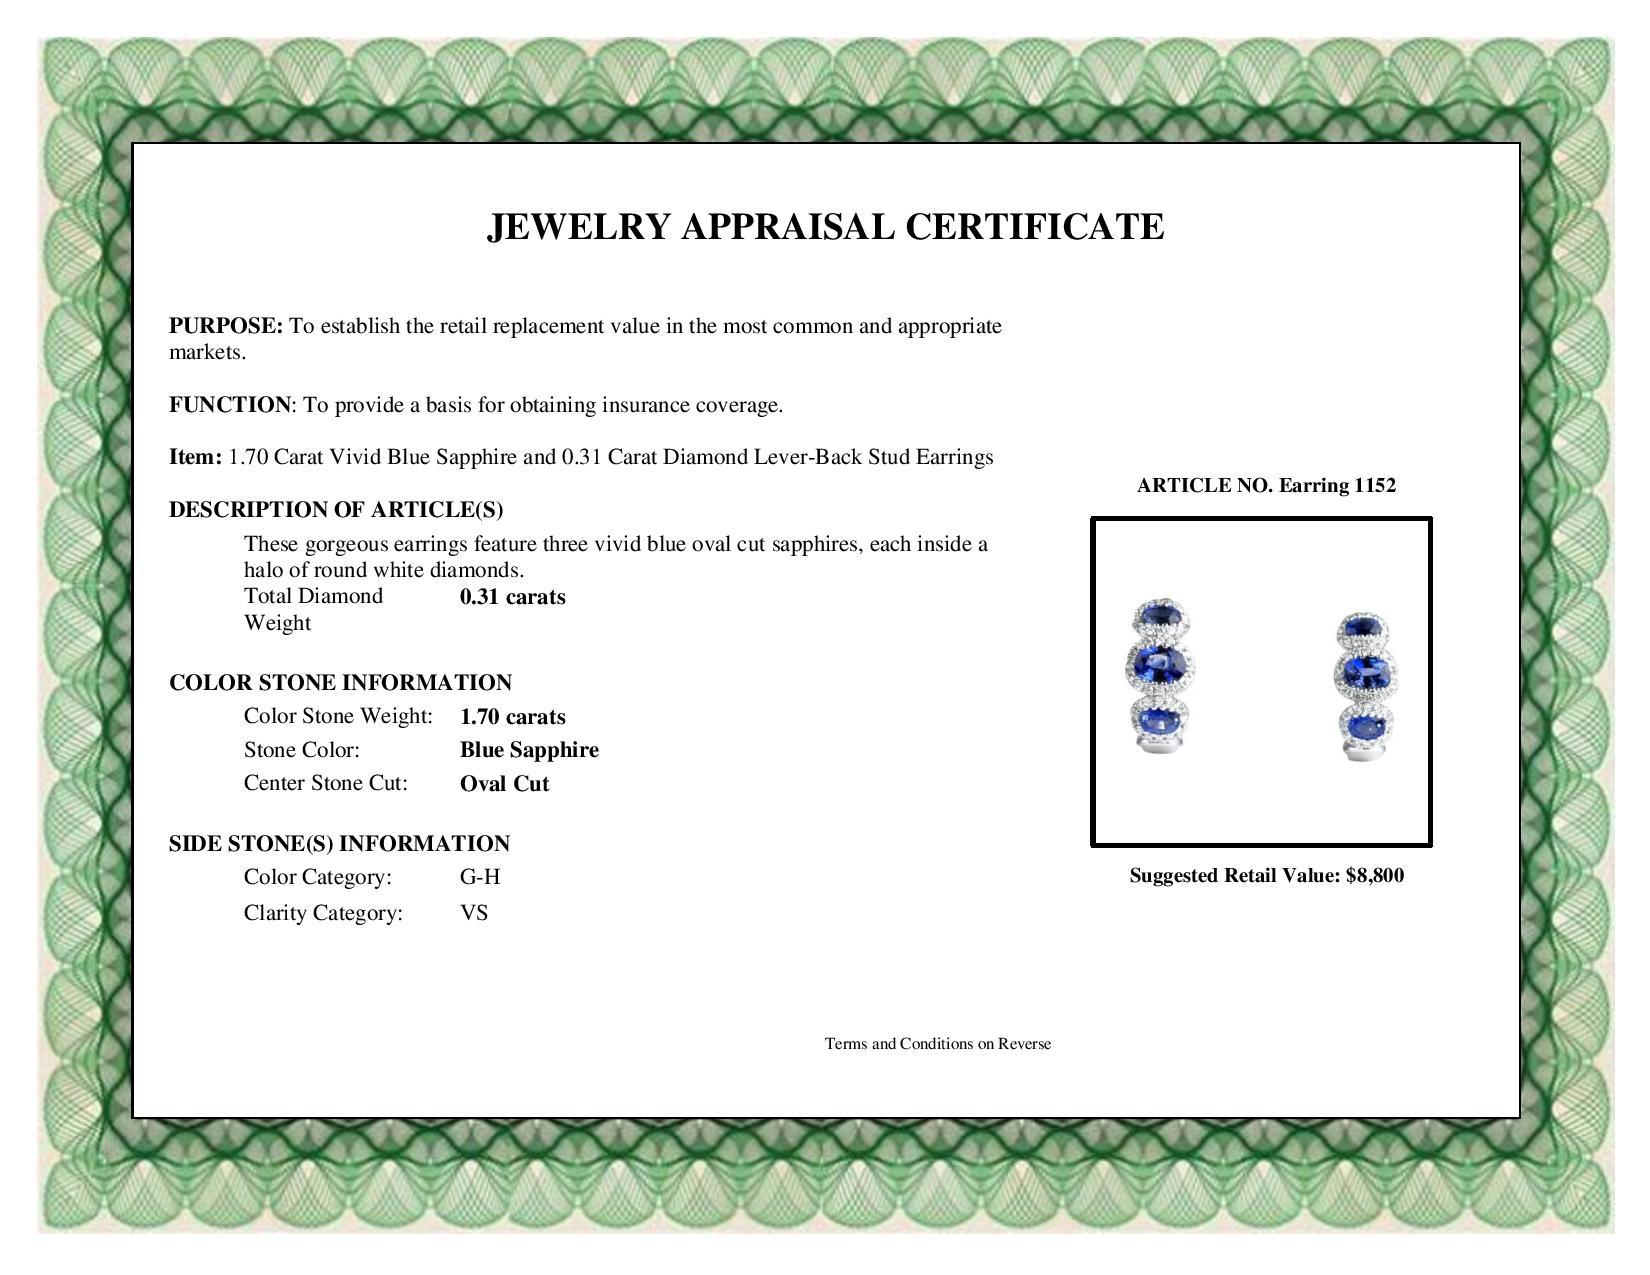 DiamondTown 1.70 Carat Vivid Blue Sapphire Lever-Back Stud Earrings 2